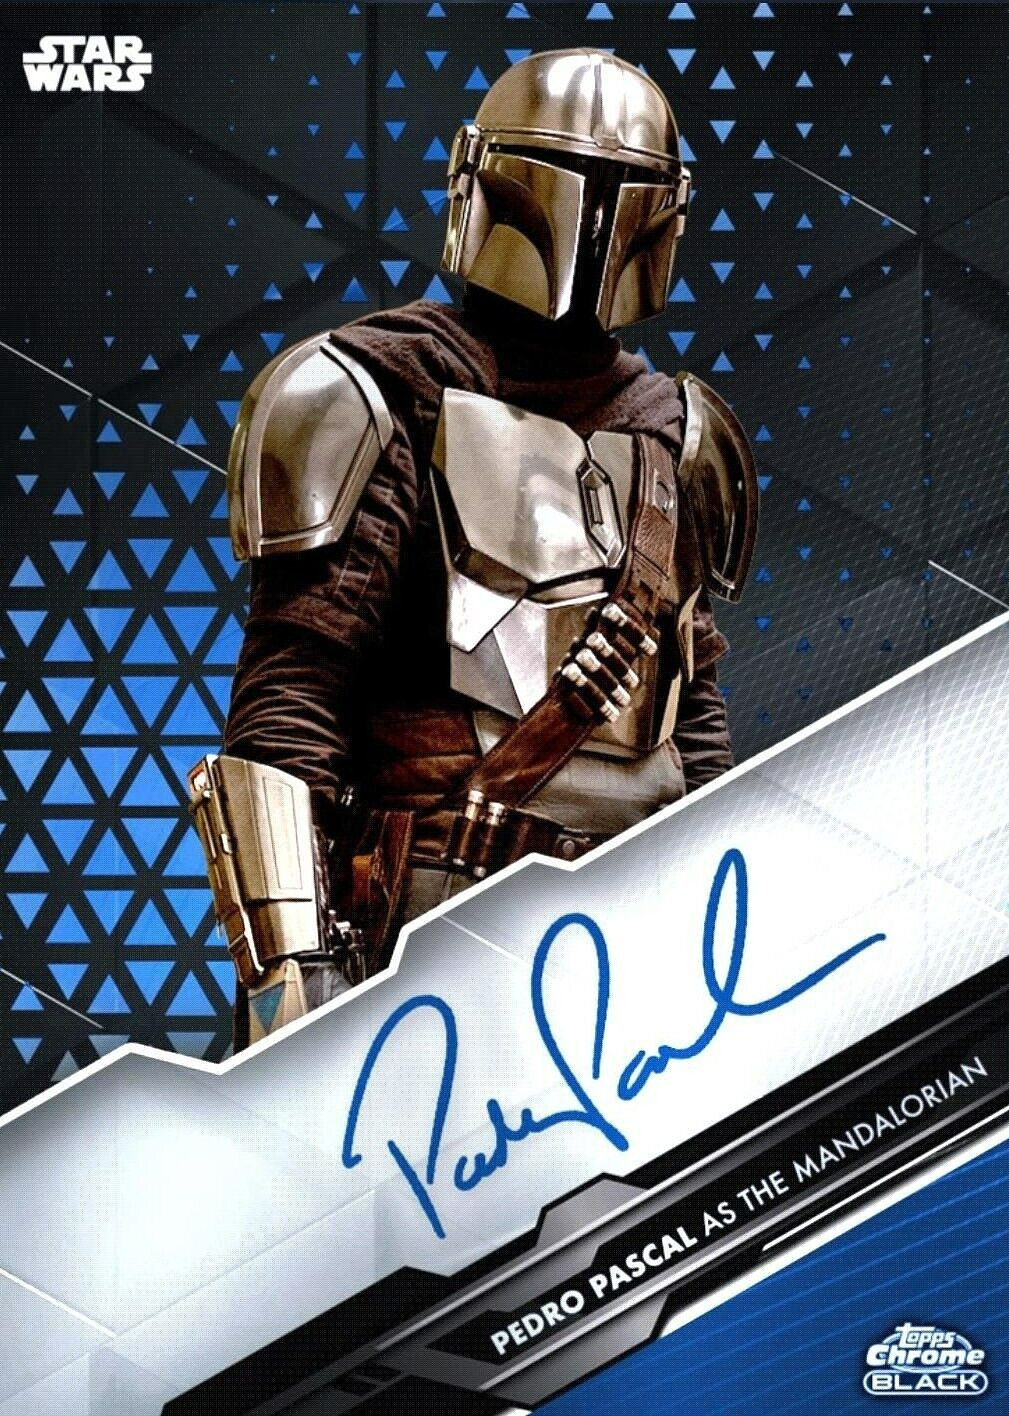 Topps Chrome Star Wars Autograph PEDRO PASCAL - THE MANDALORIAN SIG Digital Card